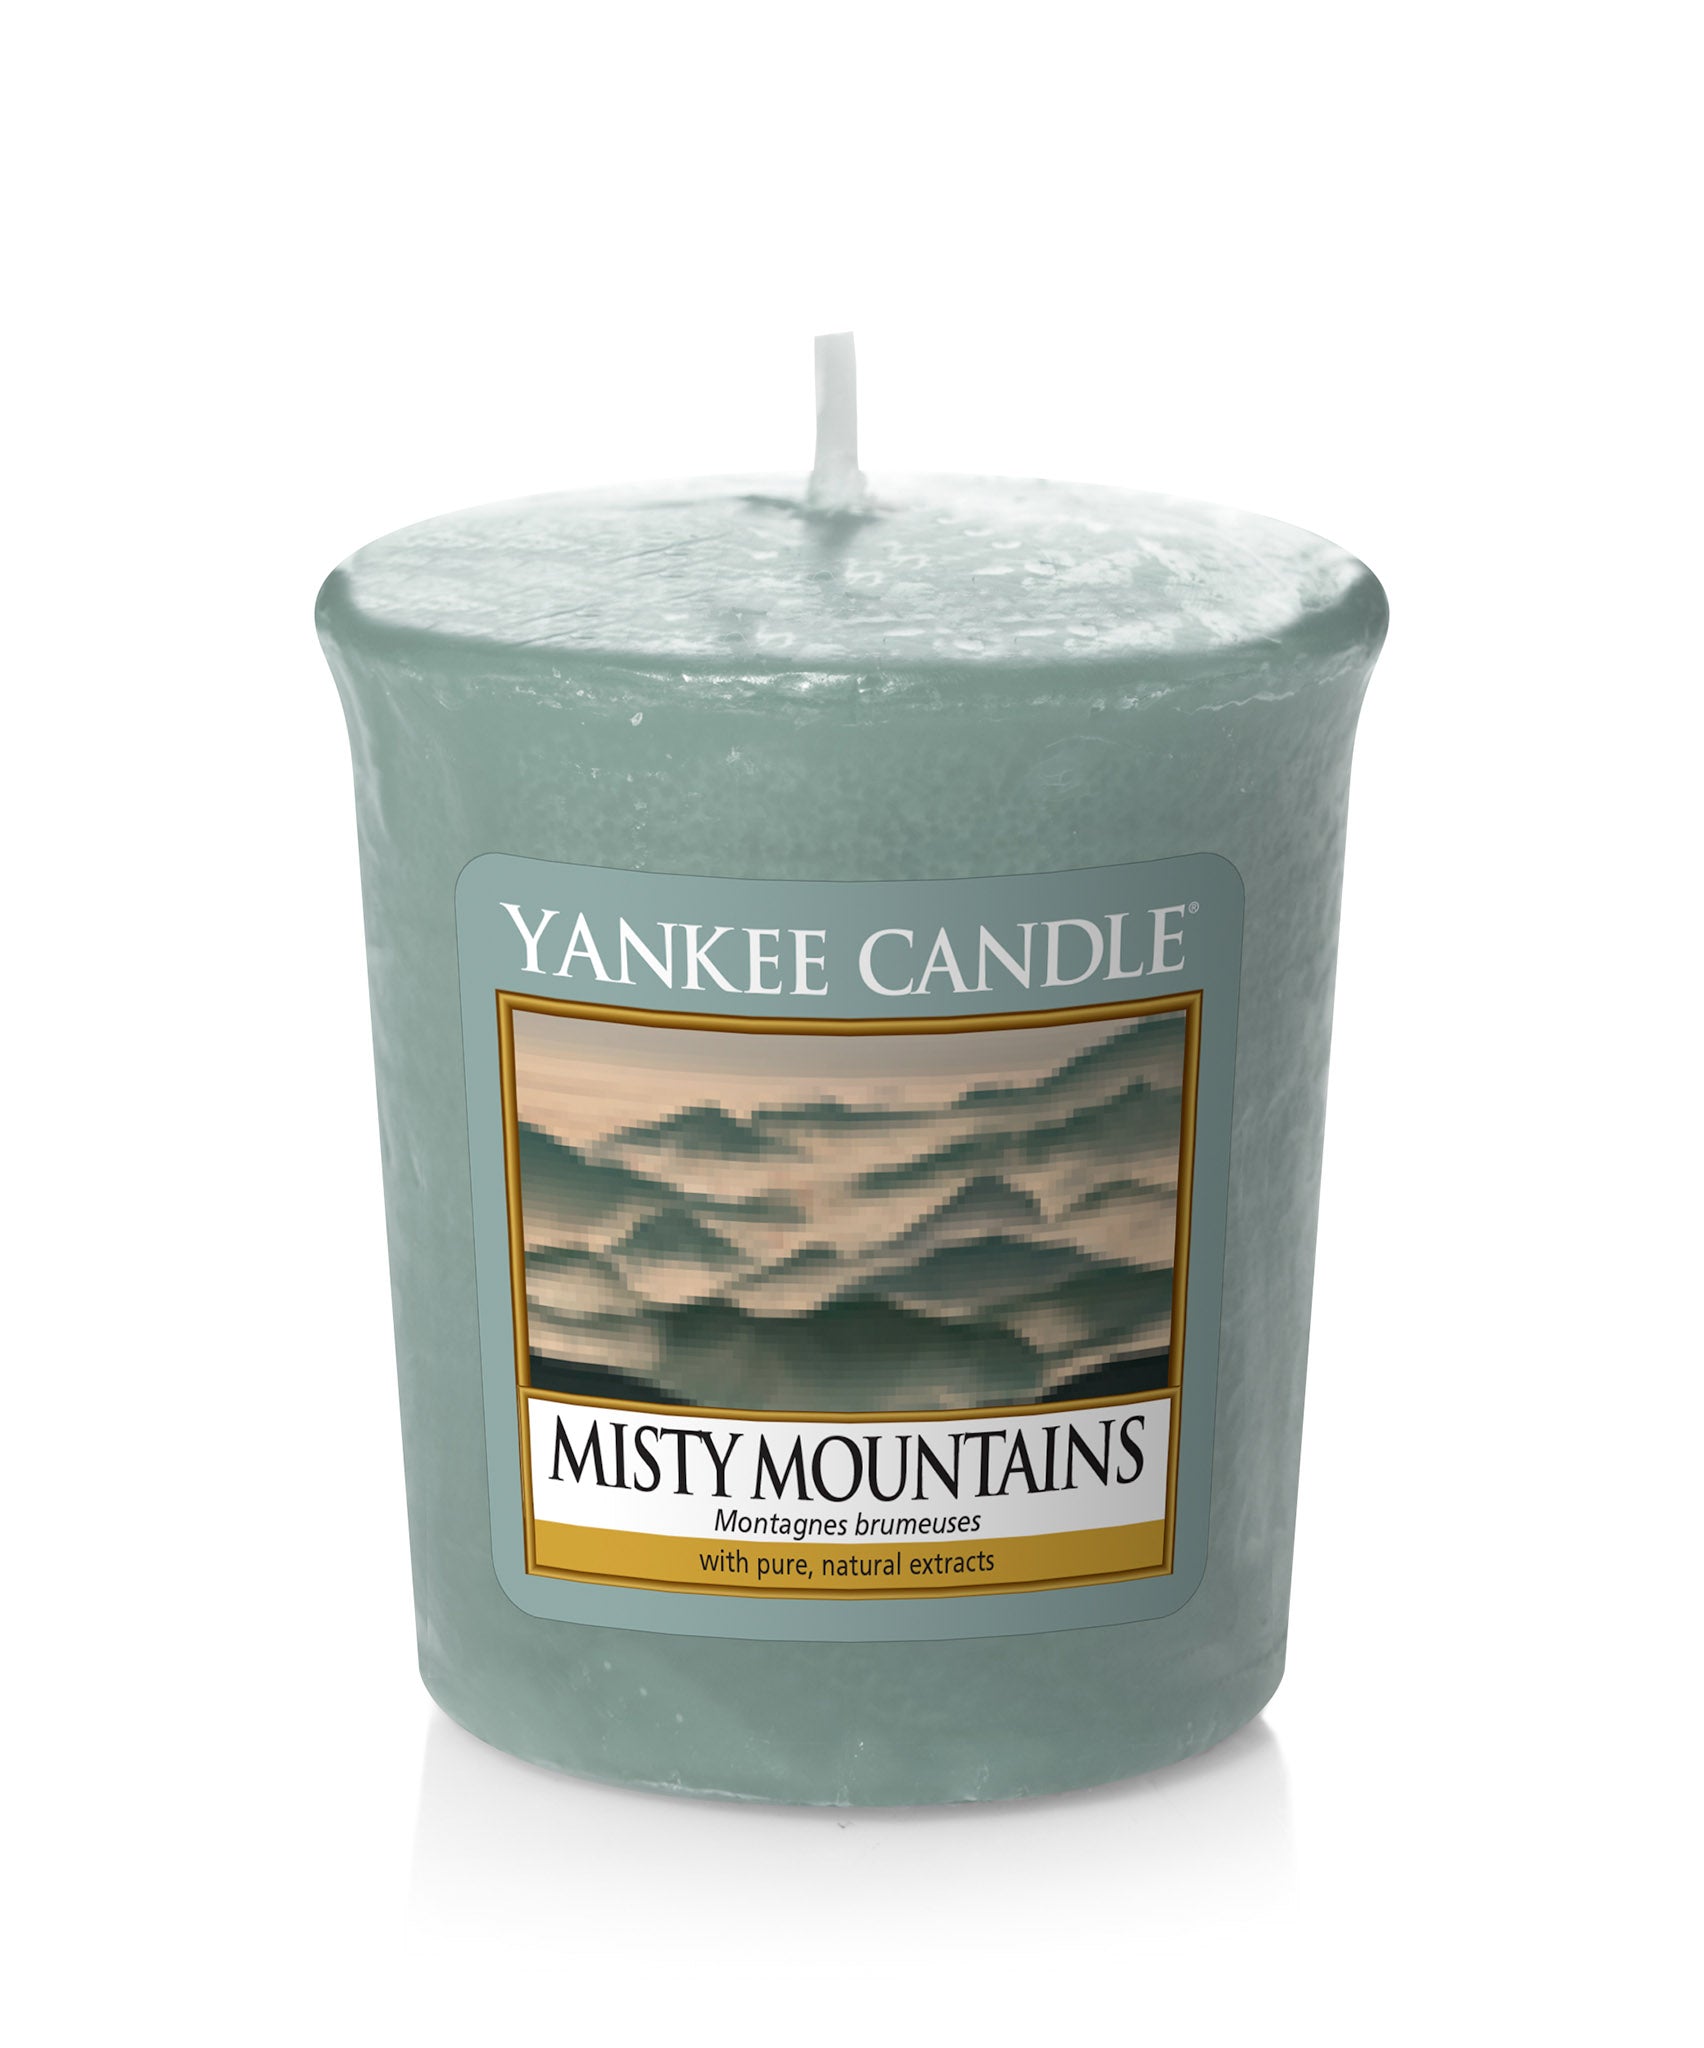 MISTY MOUNTAINS -Yankee Candle- Candela Sampler